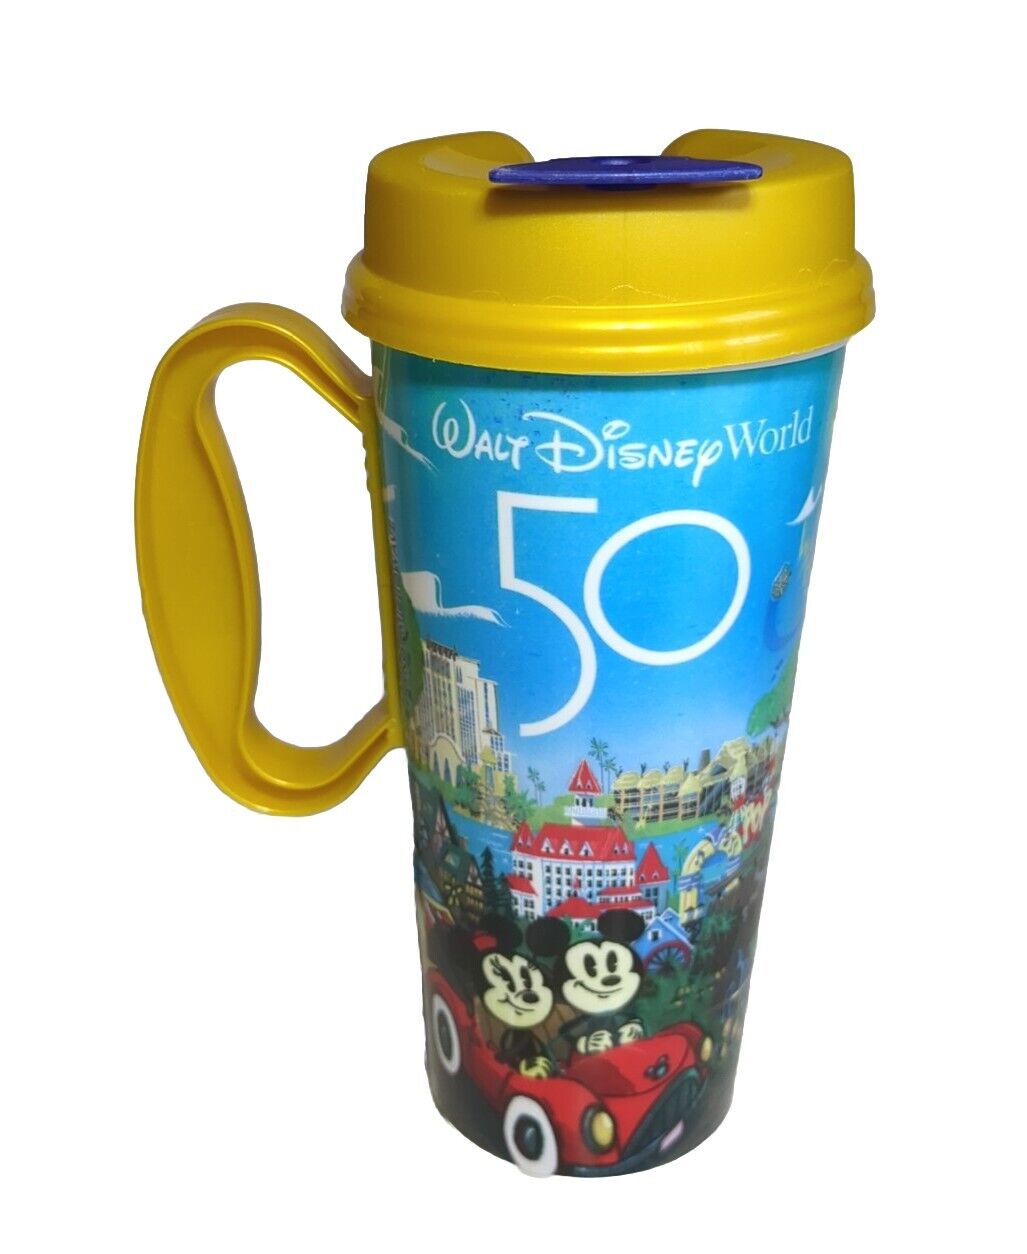 Walt Disney World 50th Anniversary Resort Plastic Refillable Cup Travel Mug